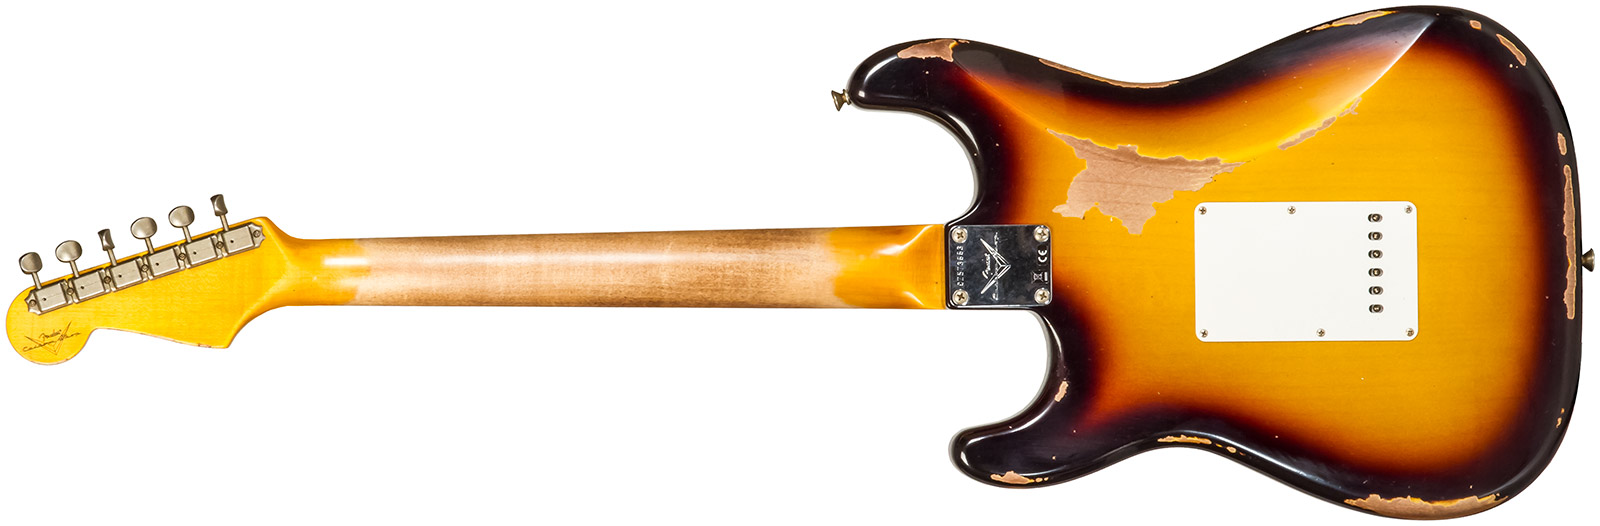 Fender Custom Shop Strat 1961 3s Trem Rw #cz573663 - Heavy Relic Aged 3-color Sunburst - Elektrische gitaar in Str-vorm - Variation 1